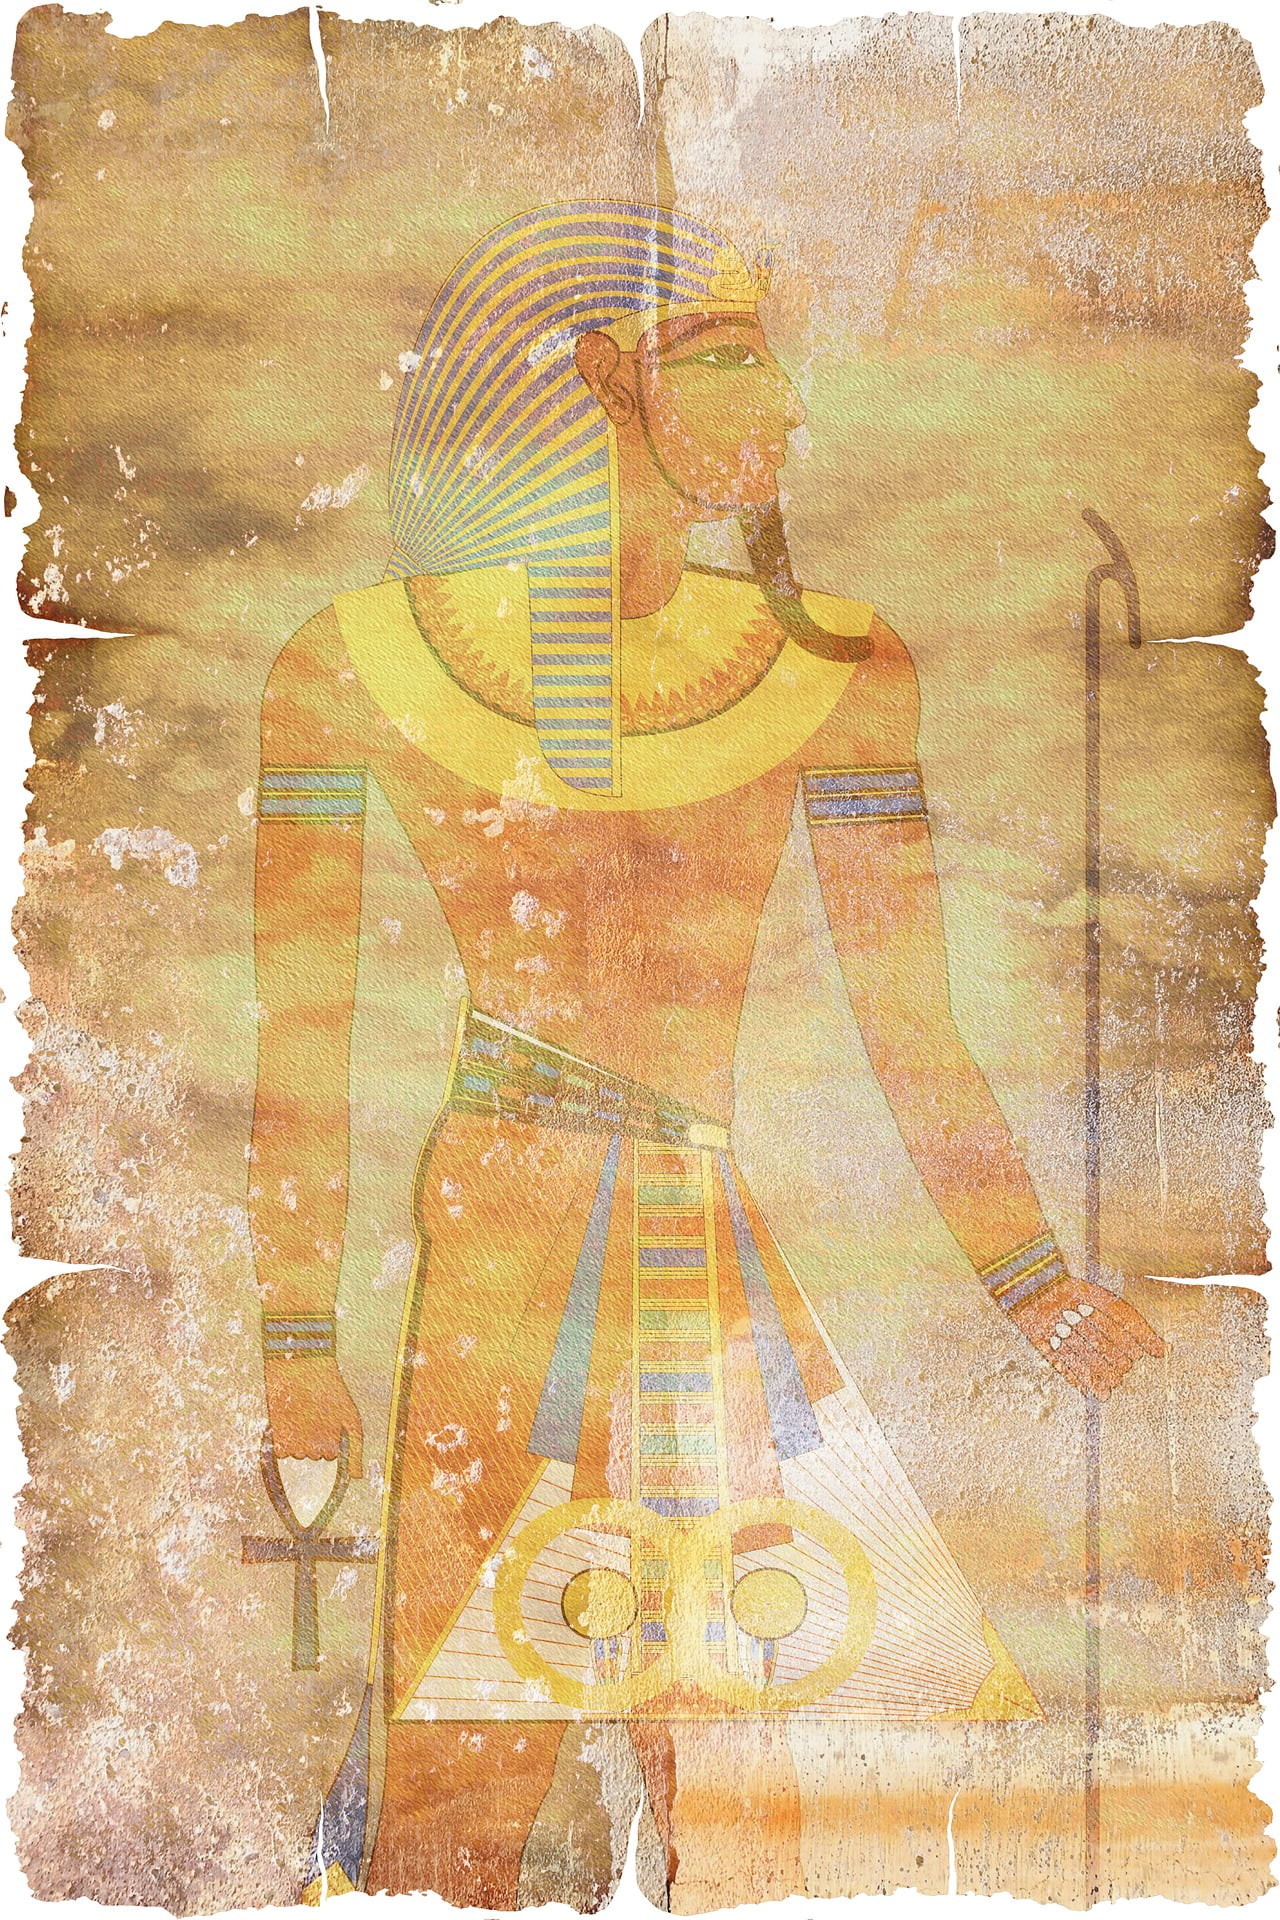 papyrus 4750377 1920 1